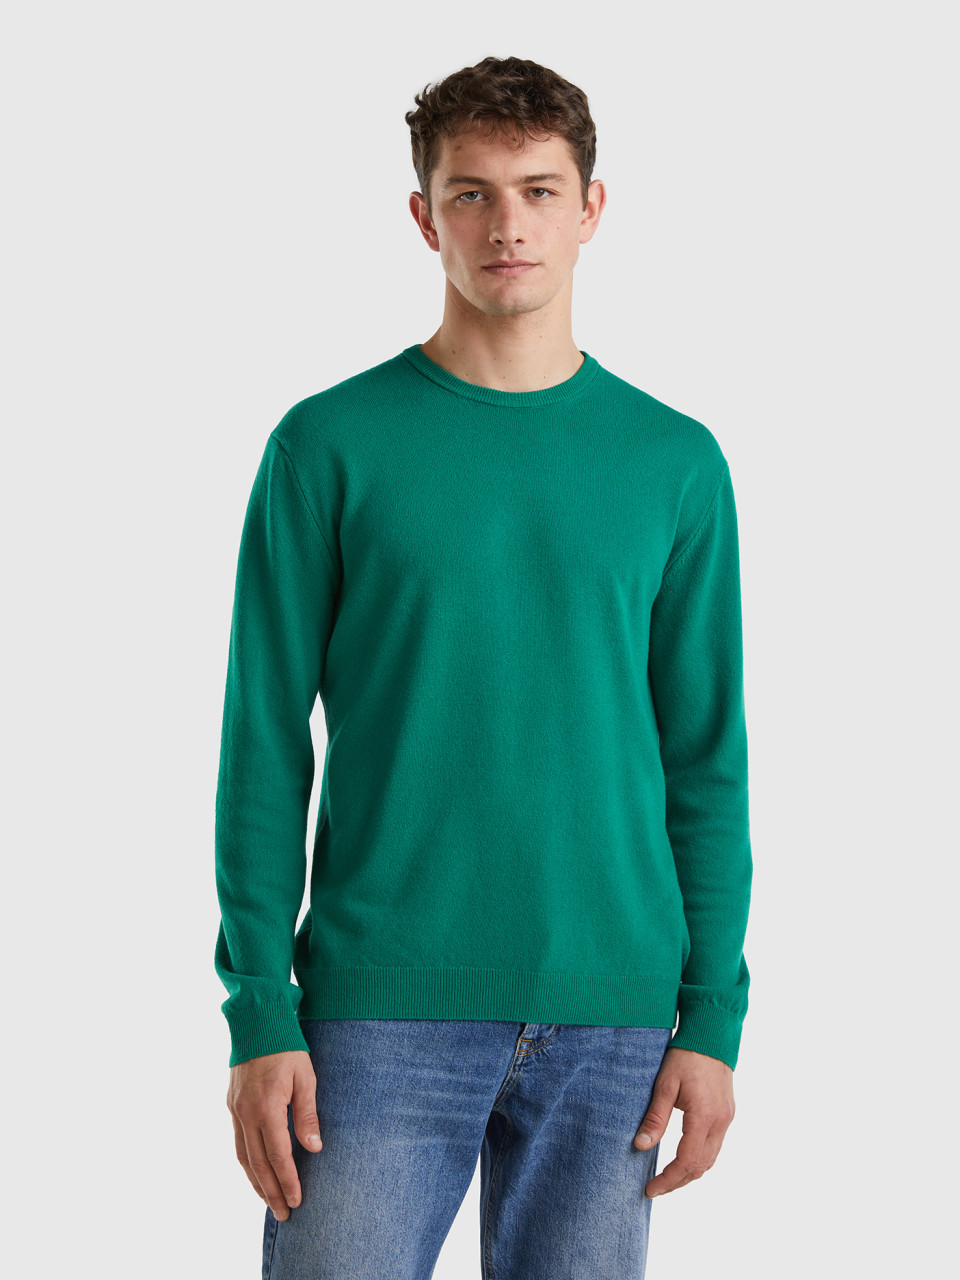 Benetton, Green Crew Neck Sweater In Pure Merino Wool, Green, Men